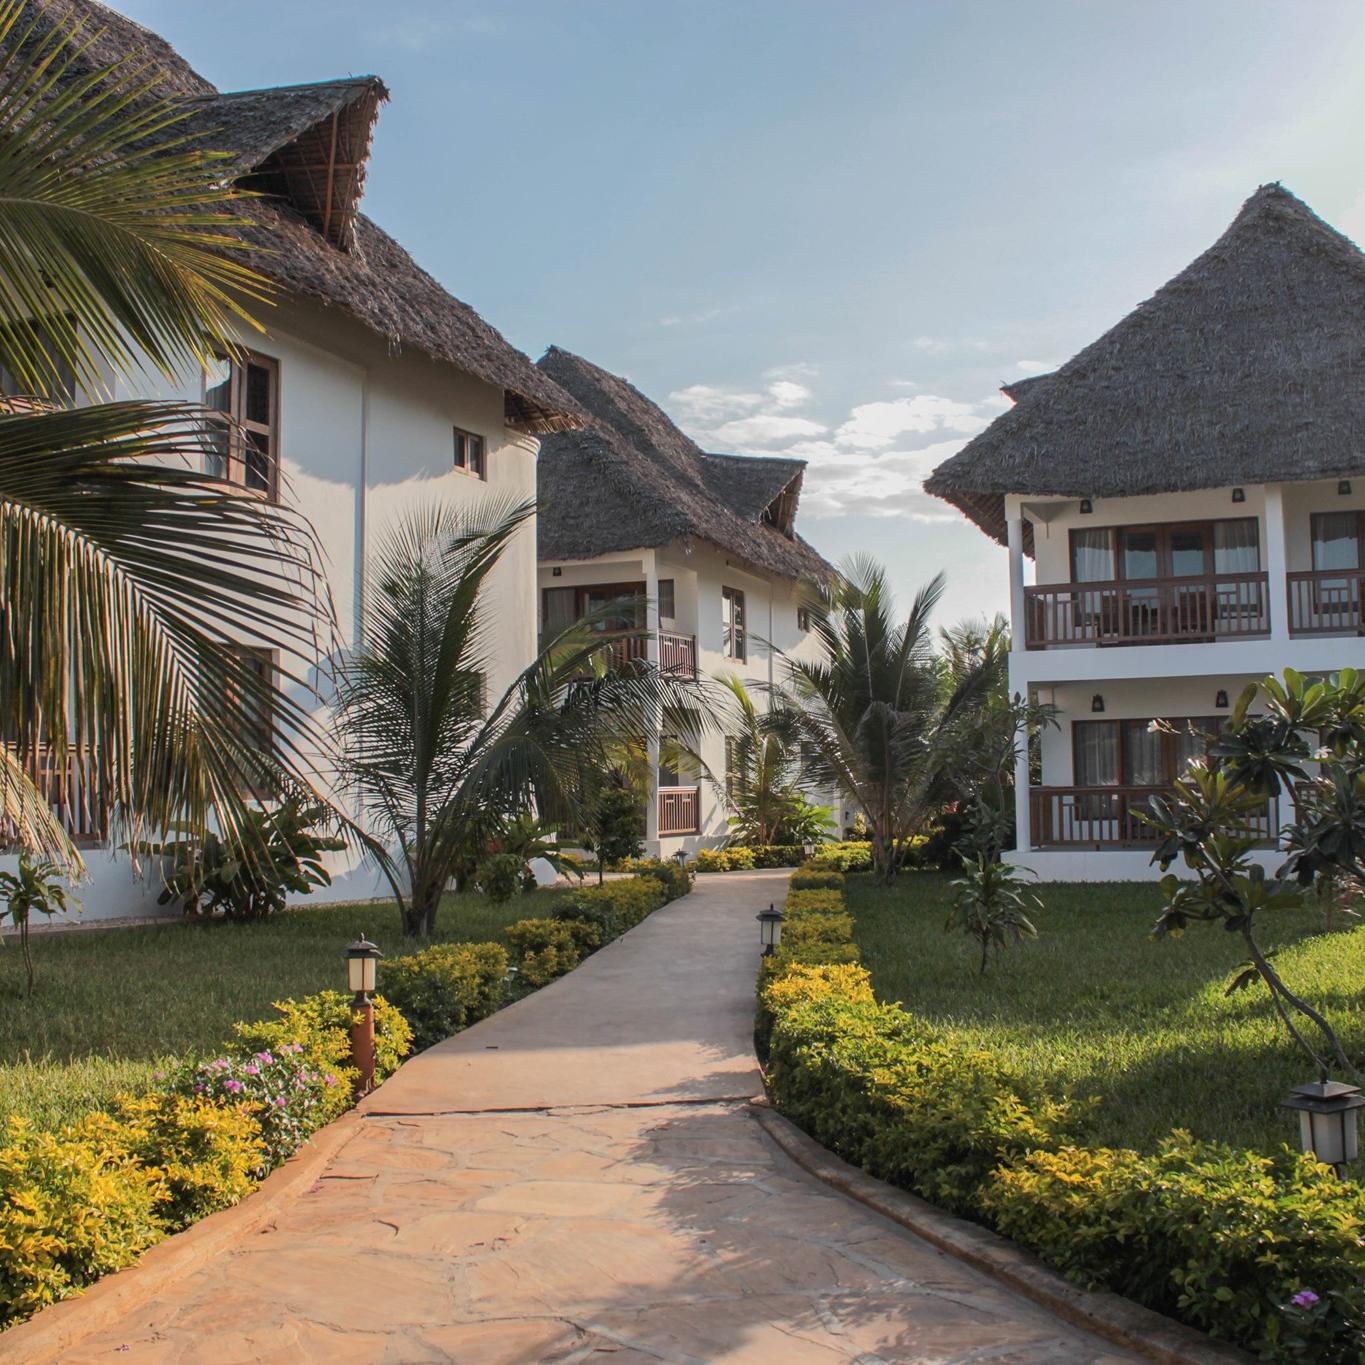 Zanzibar Bahari Villas villadzor villas